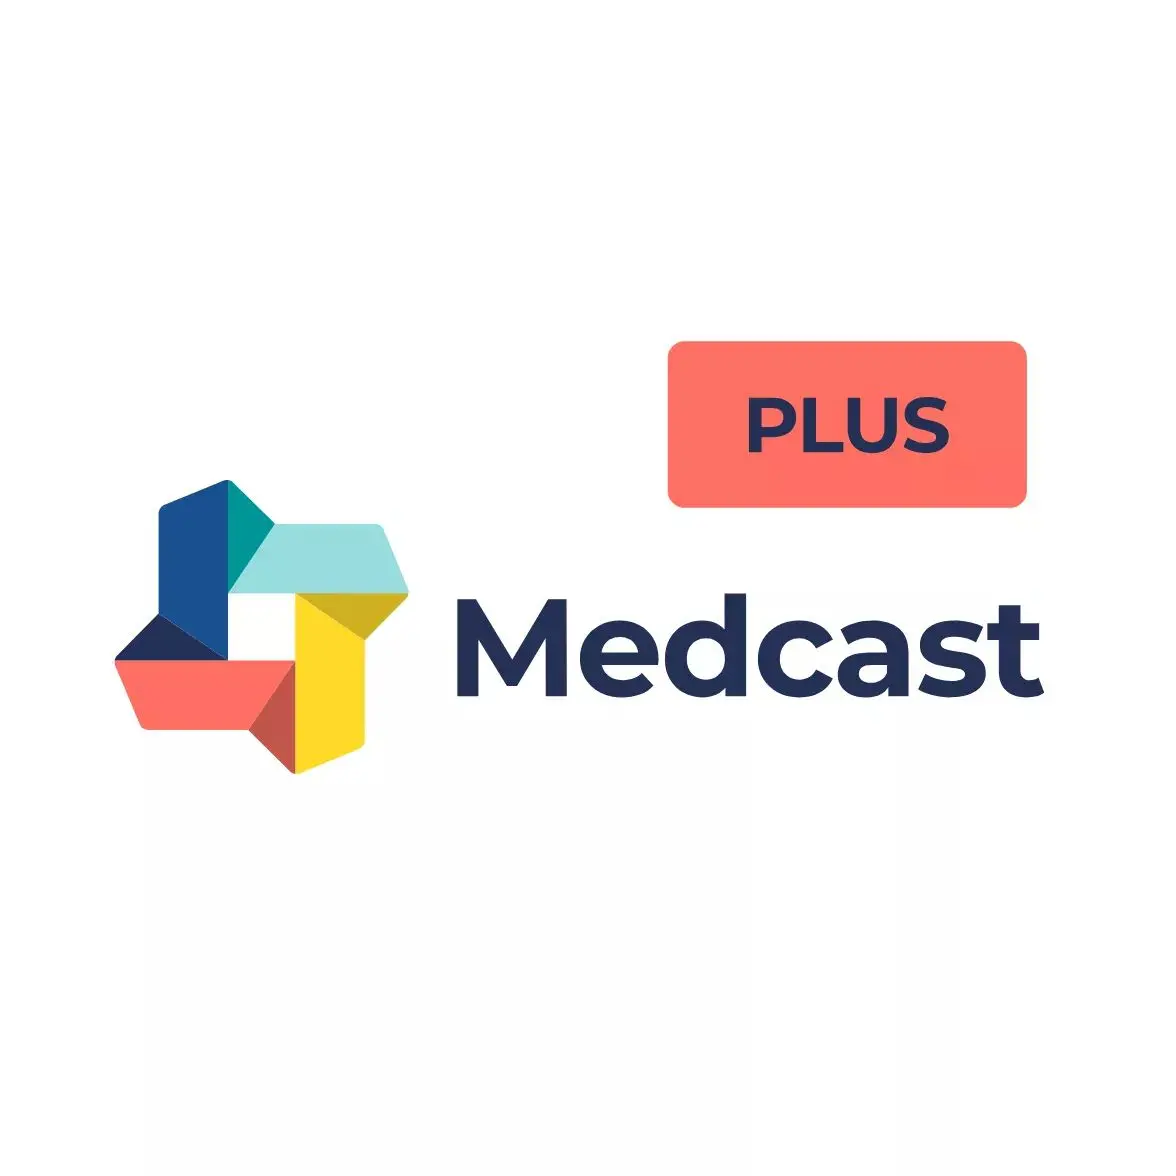 Medcast Plus Logo